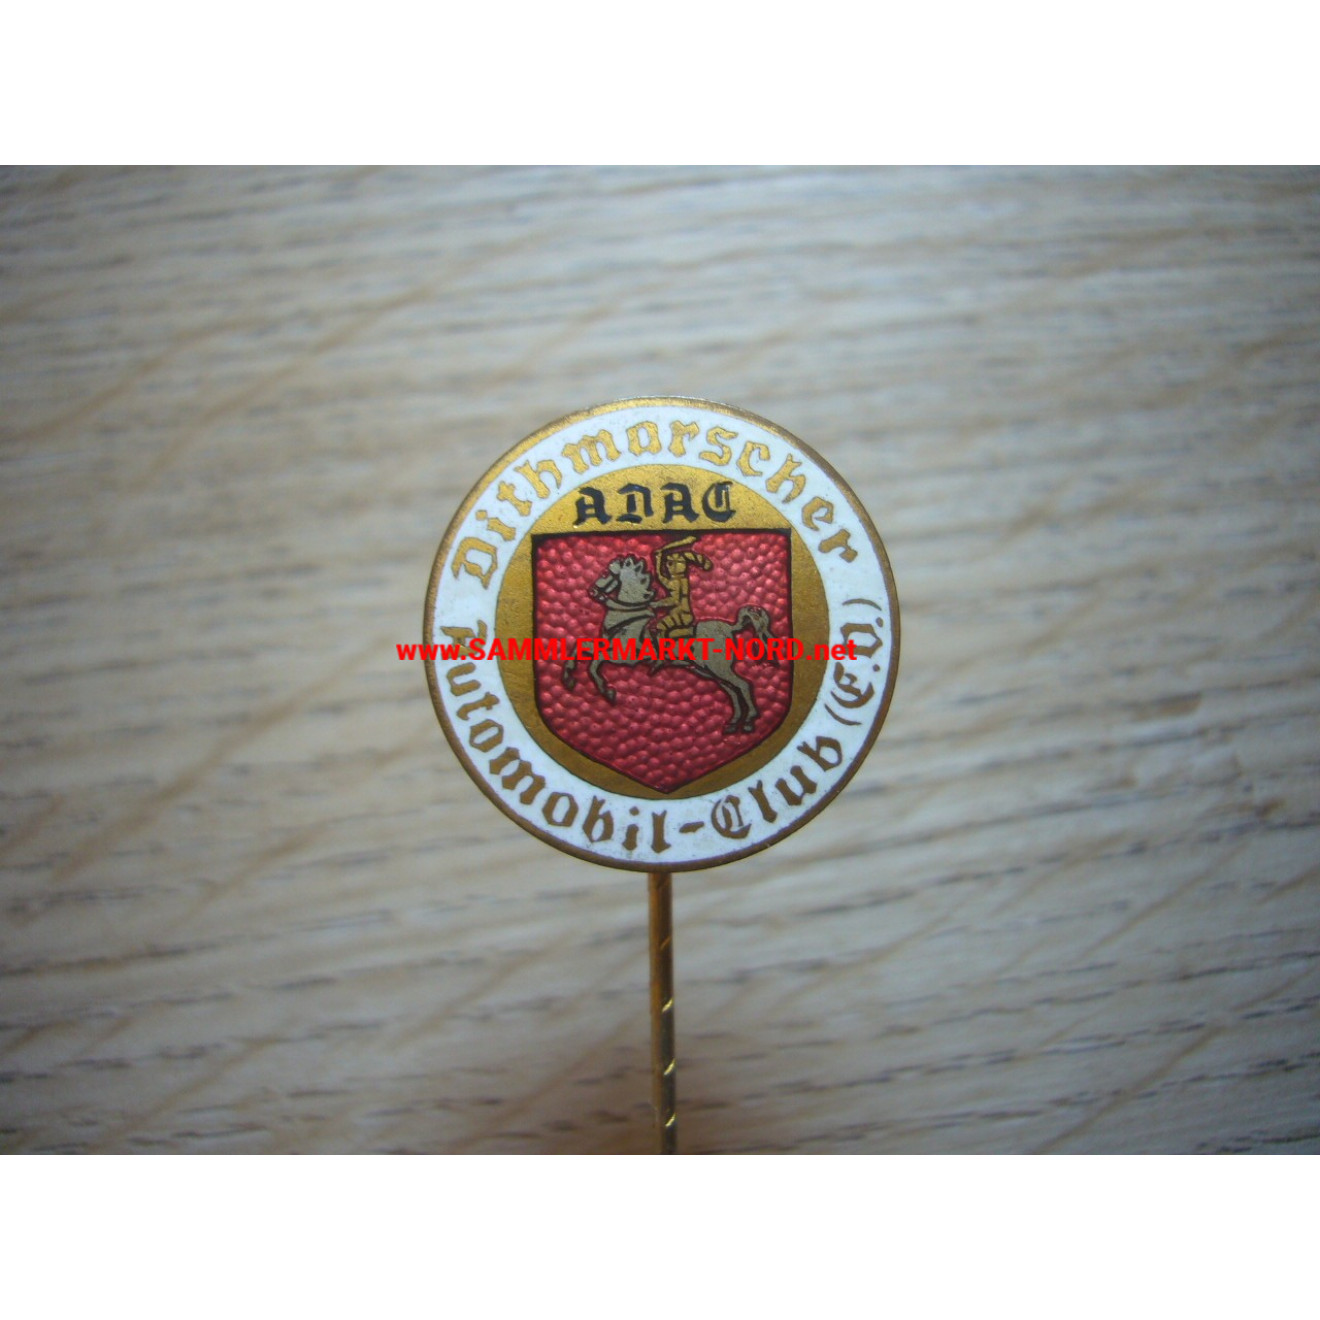 ADAC - Dithmarscher Automobile Club - Membership Badge